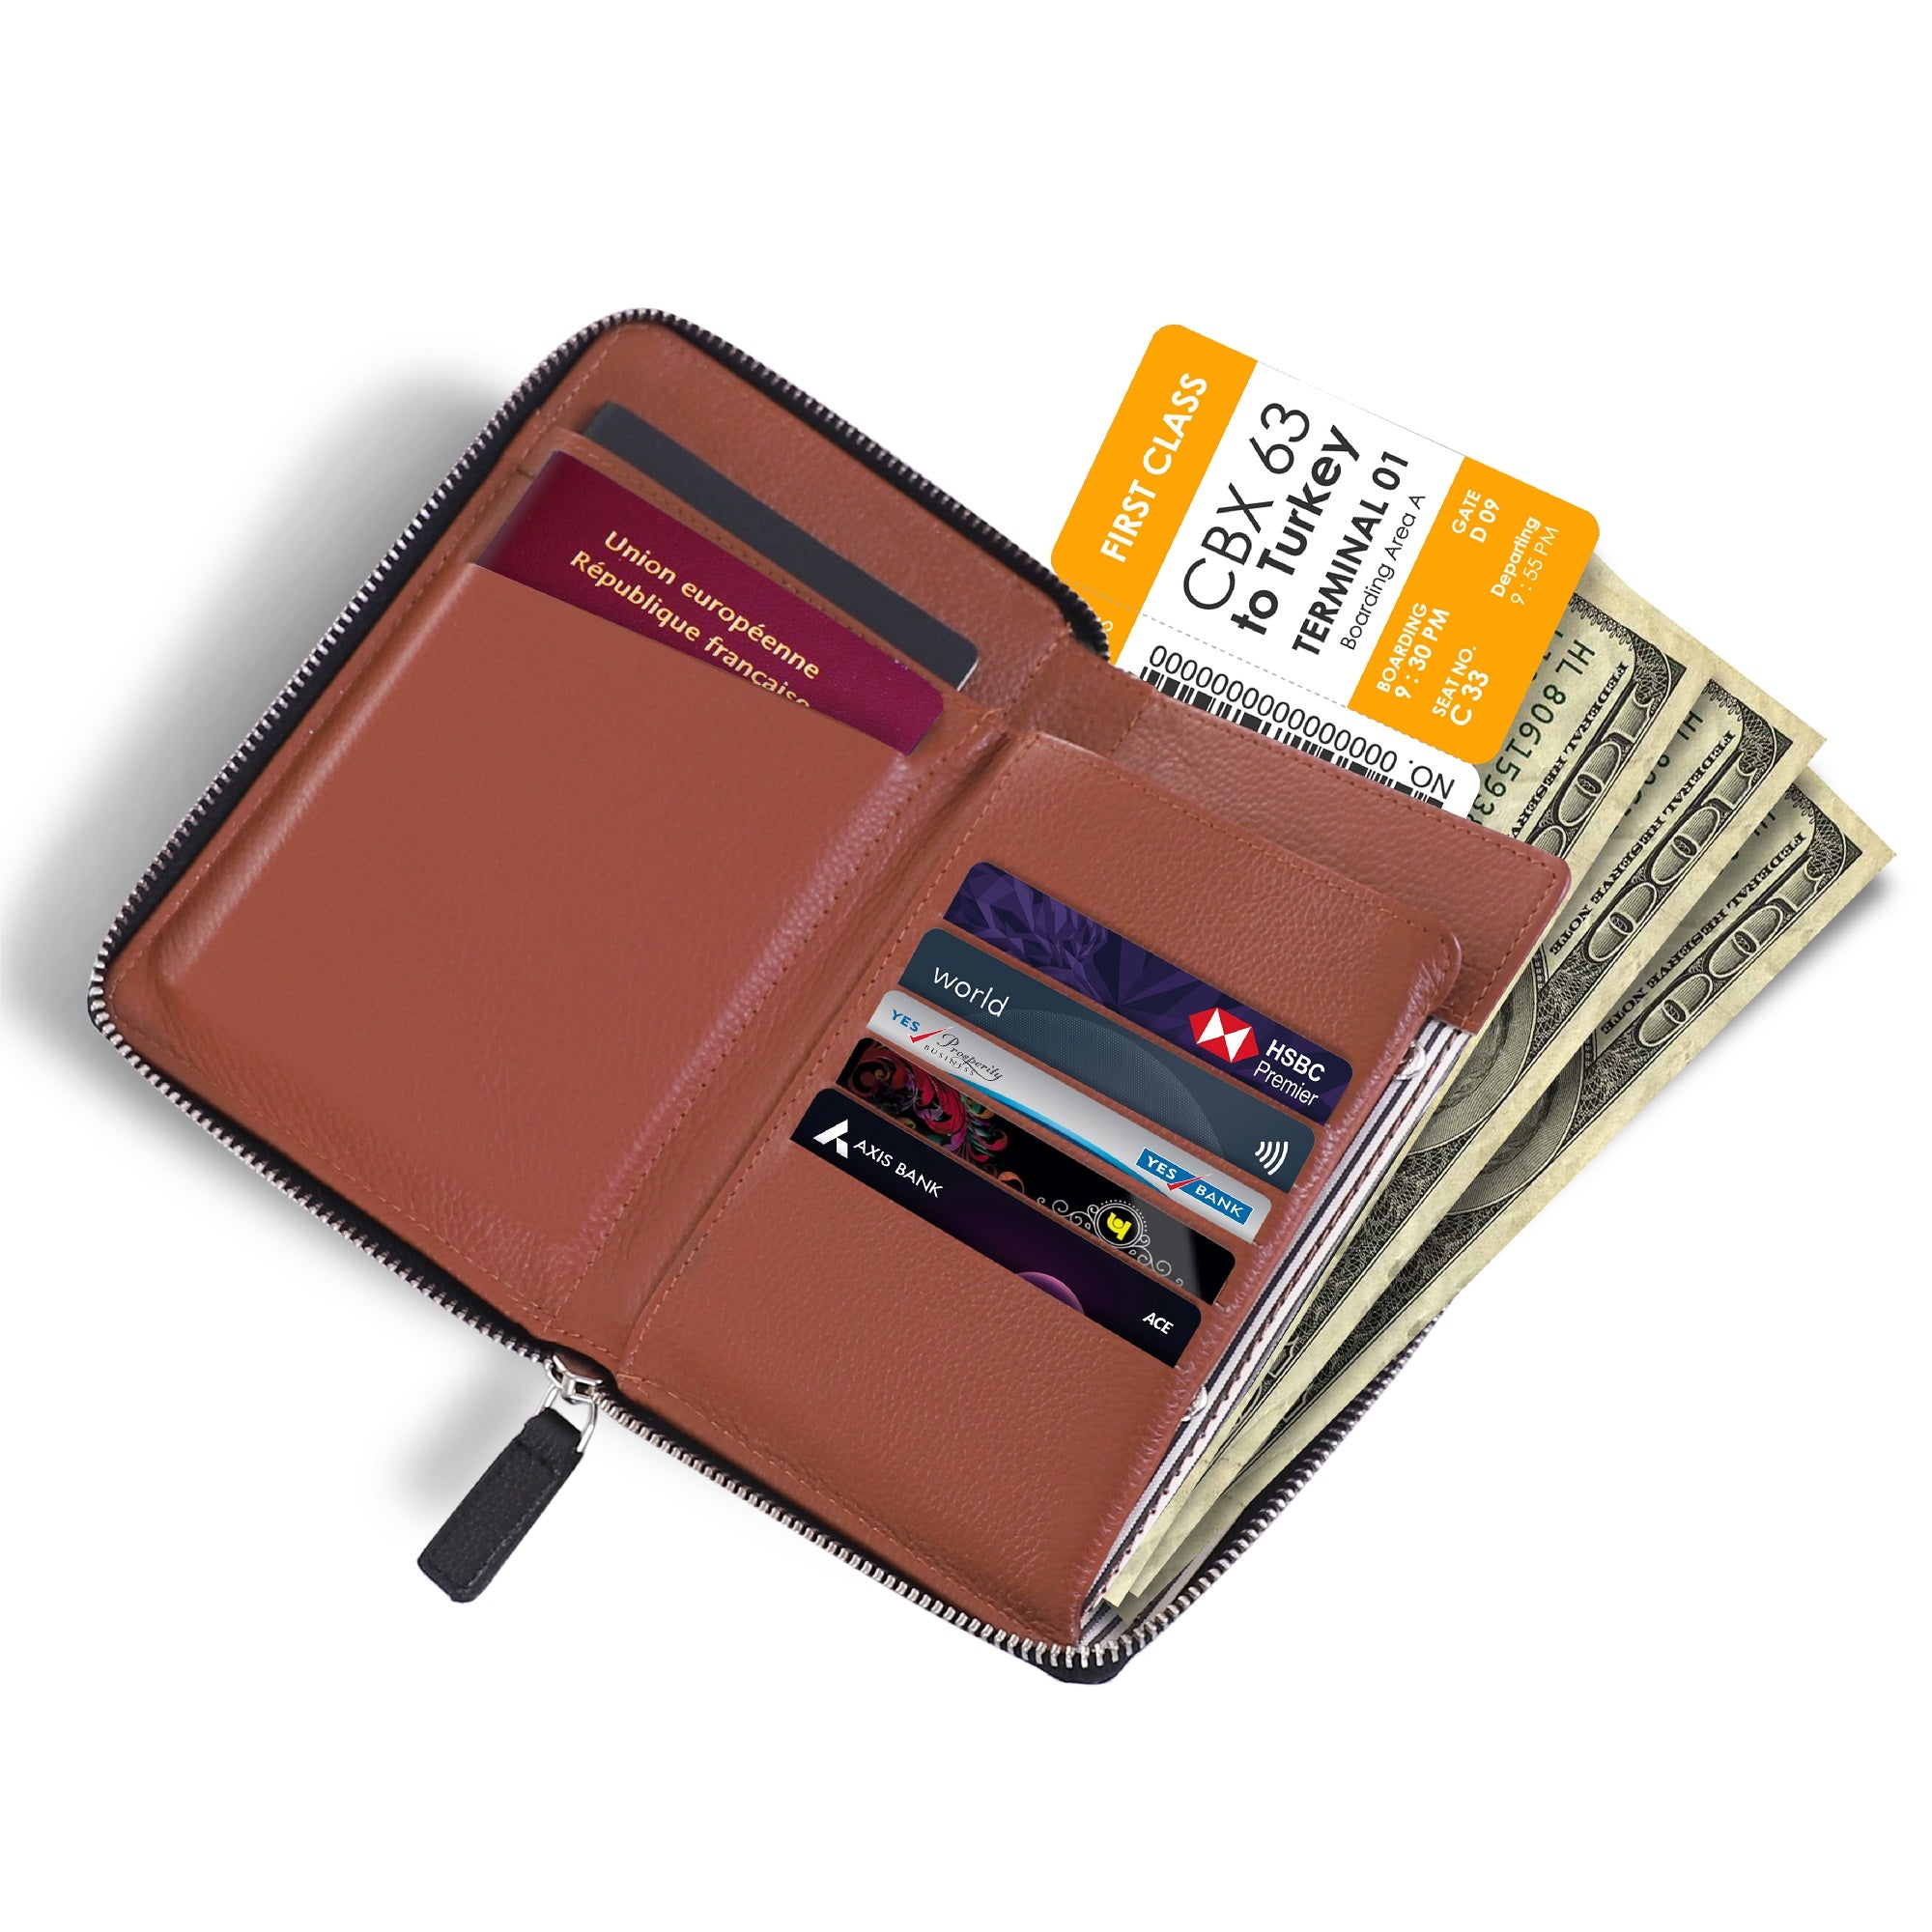 Coin Purse Travel Accessories ID Bank Card Passport Cover Wallet Case Passport  Holder Passport Book – the best products in the Joom Geek online store